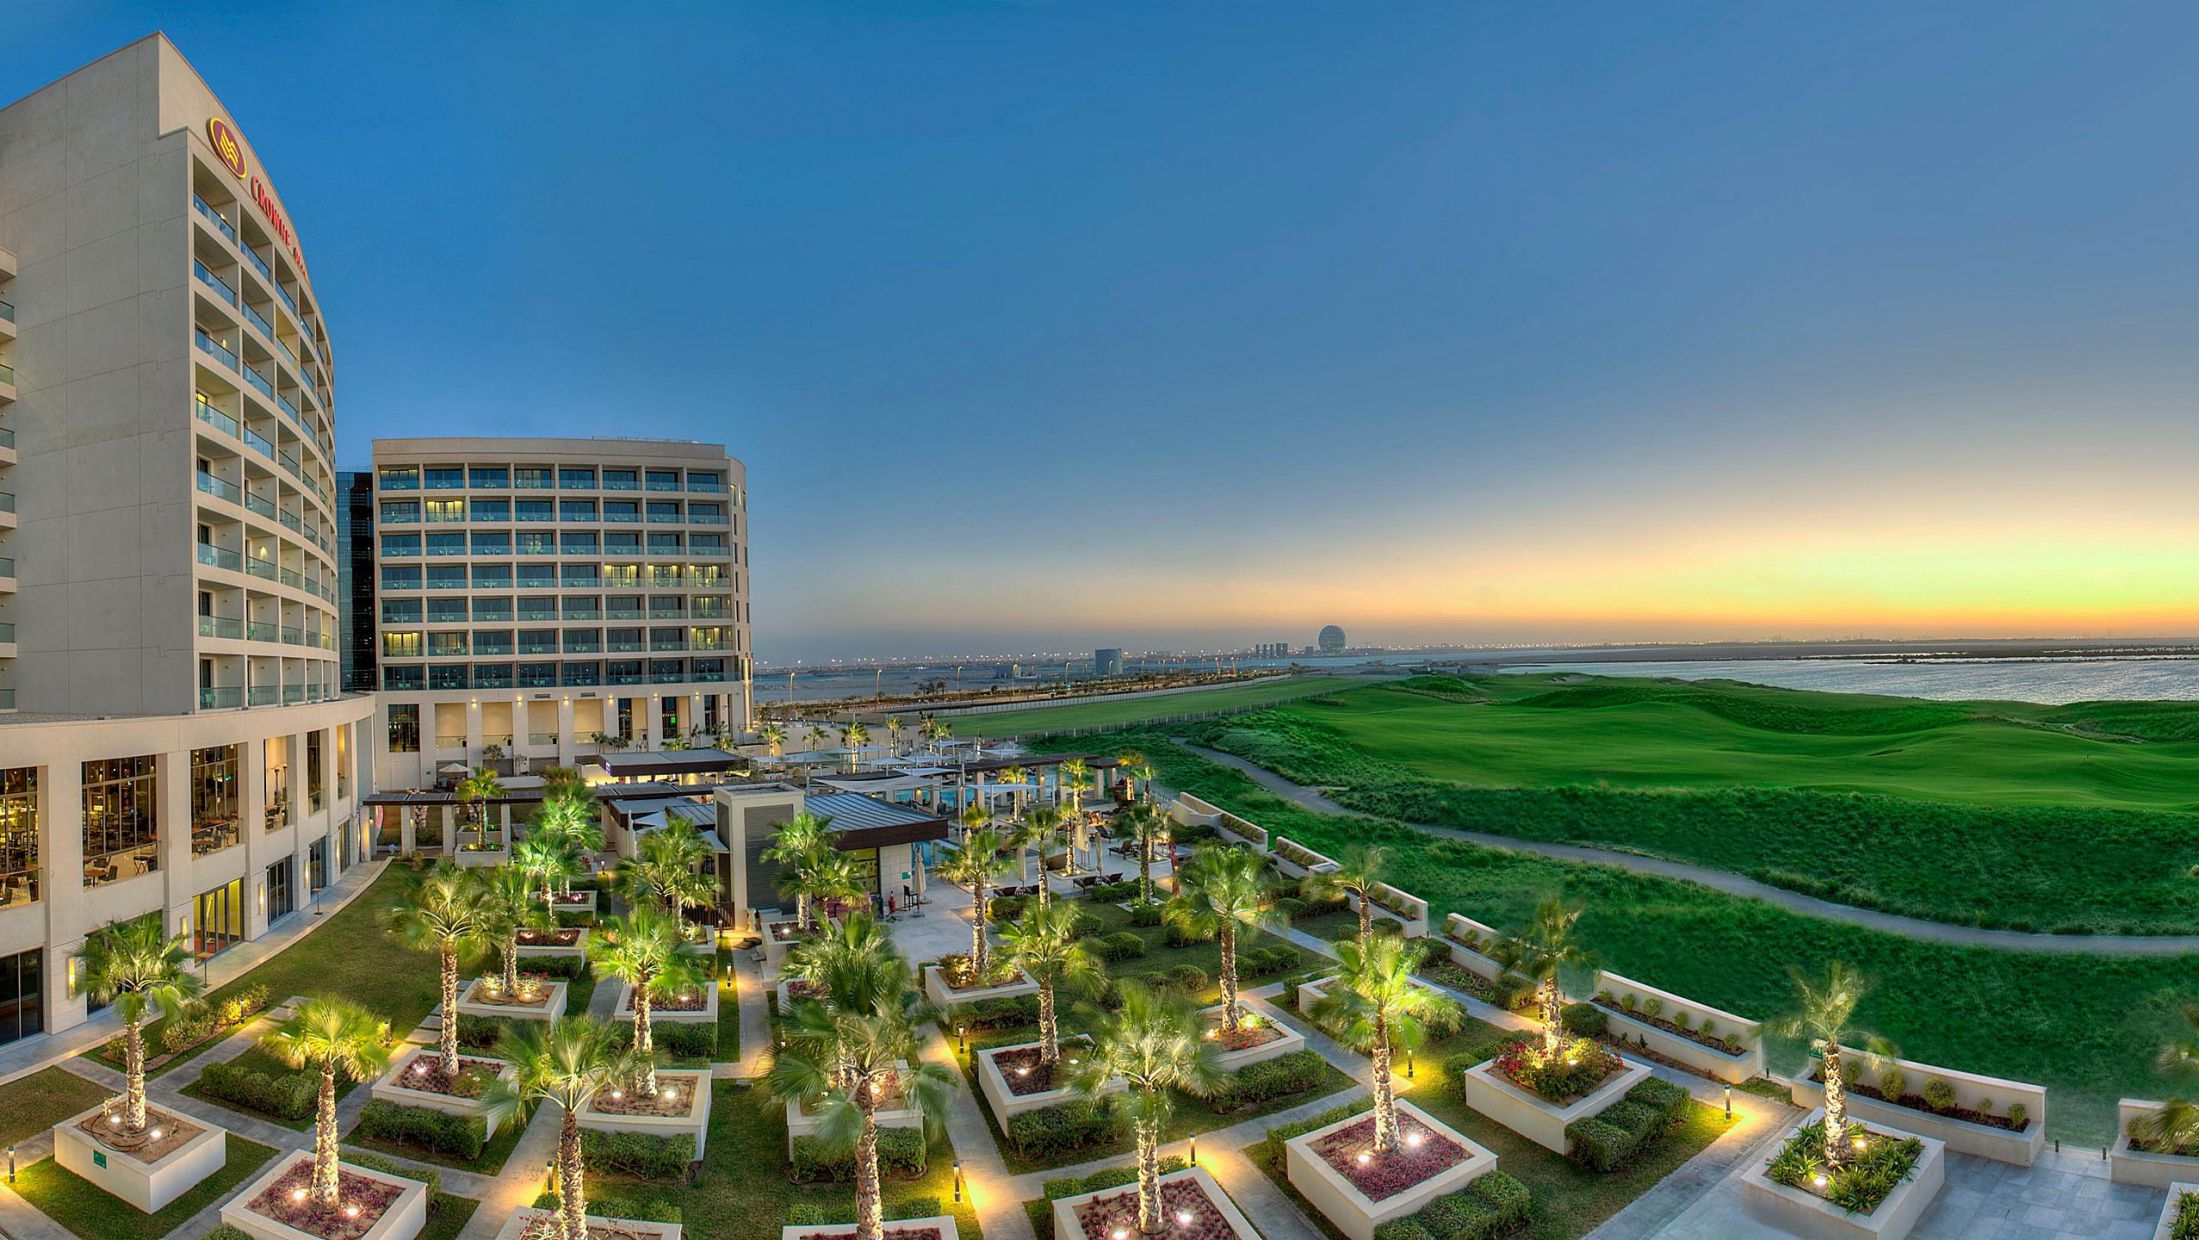 Отель Crowne Plaza Абу Даби. Crowne Plaza 5 Абу Даби. Crowne Plaza Abu Dhabi yas Island 5*. Crowne Plaza Abu Dhabi 5*, ОАЭ, Абу-Даби.